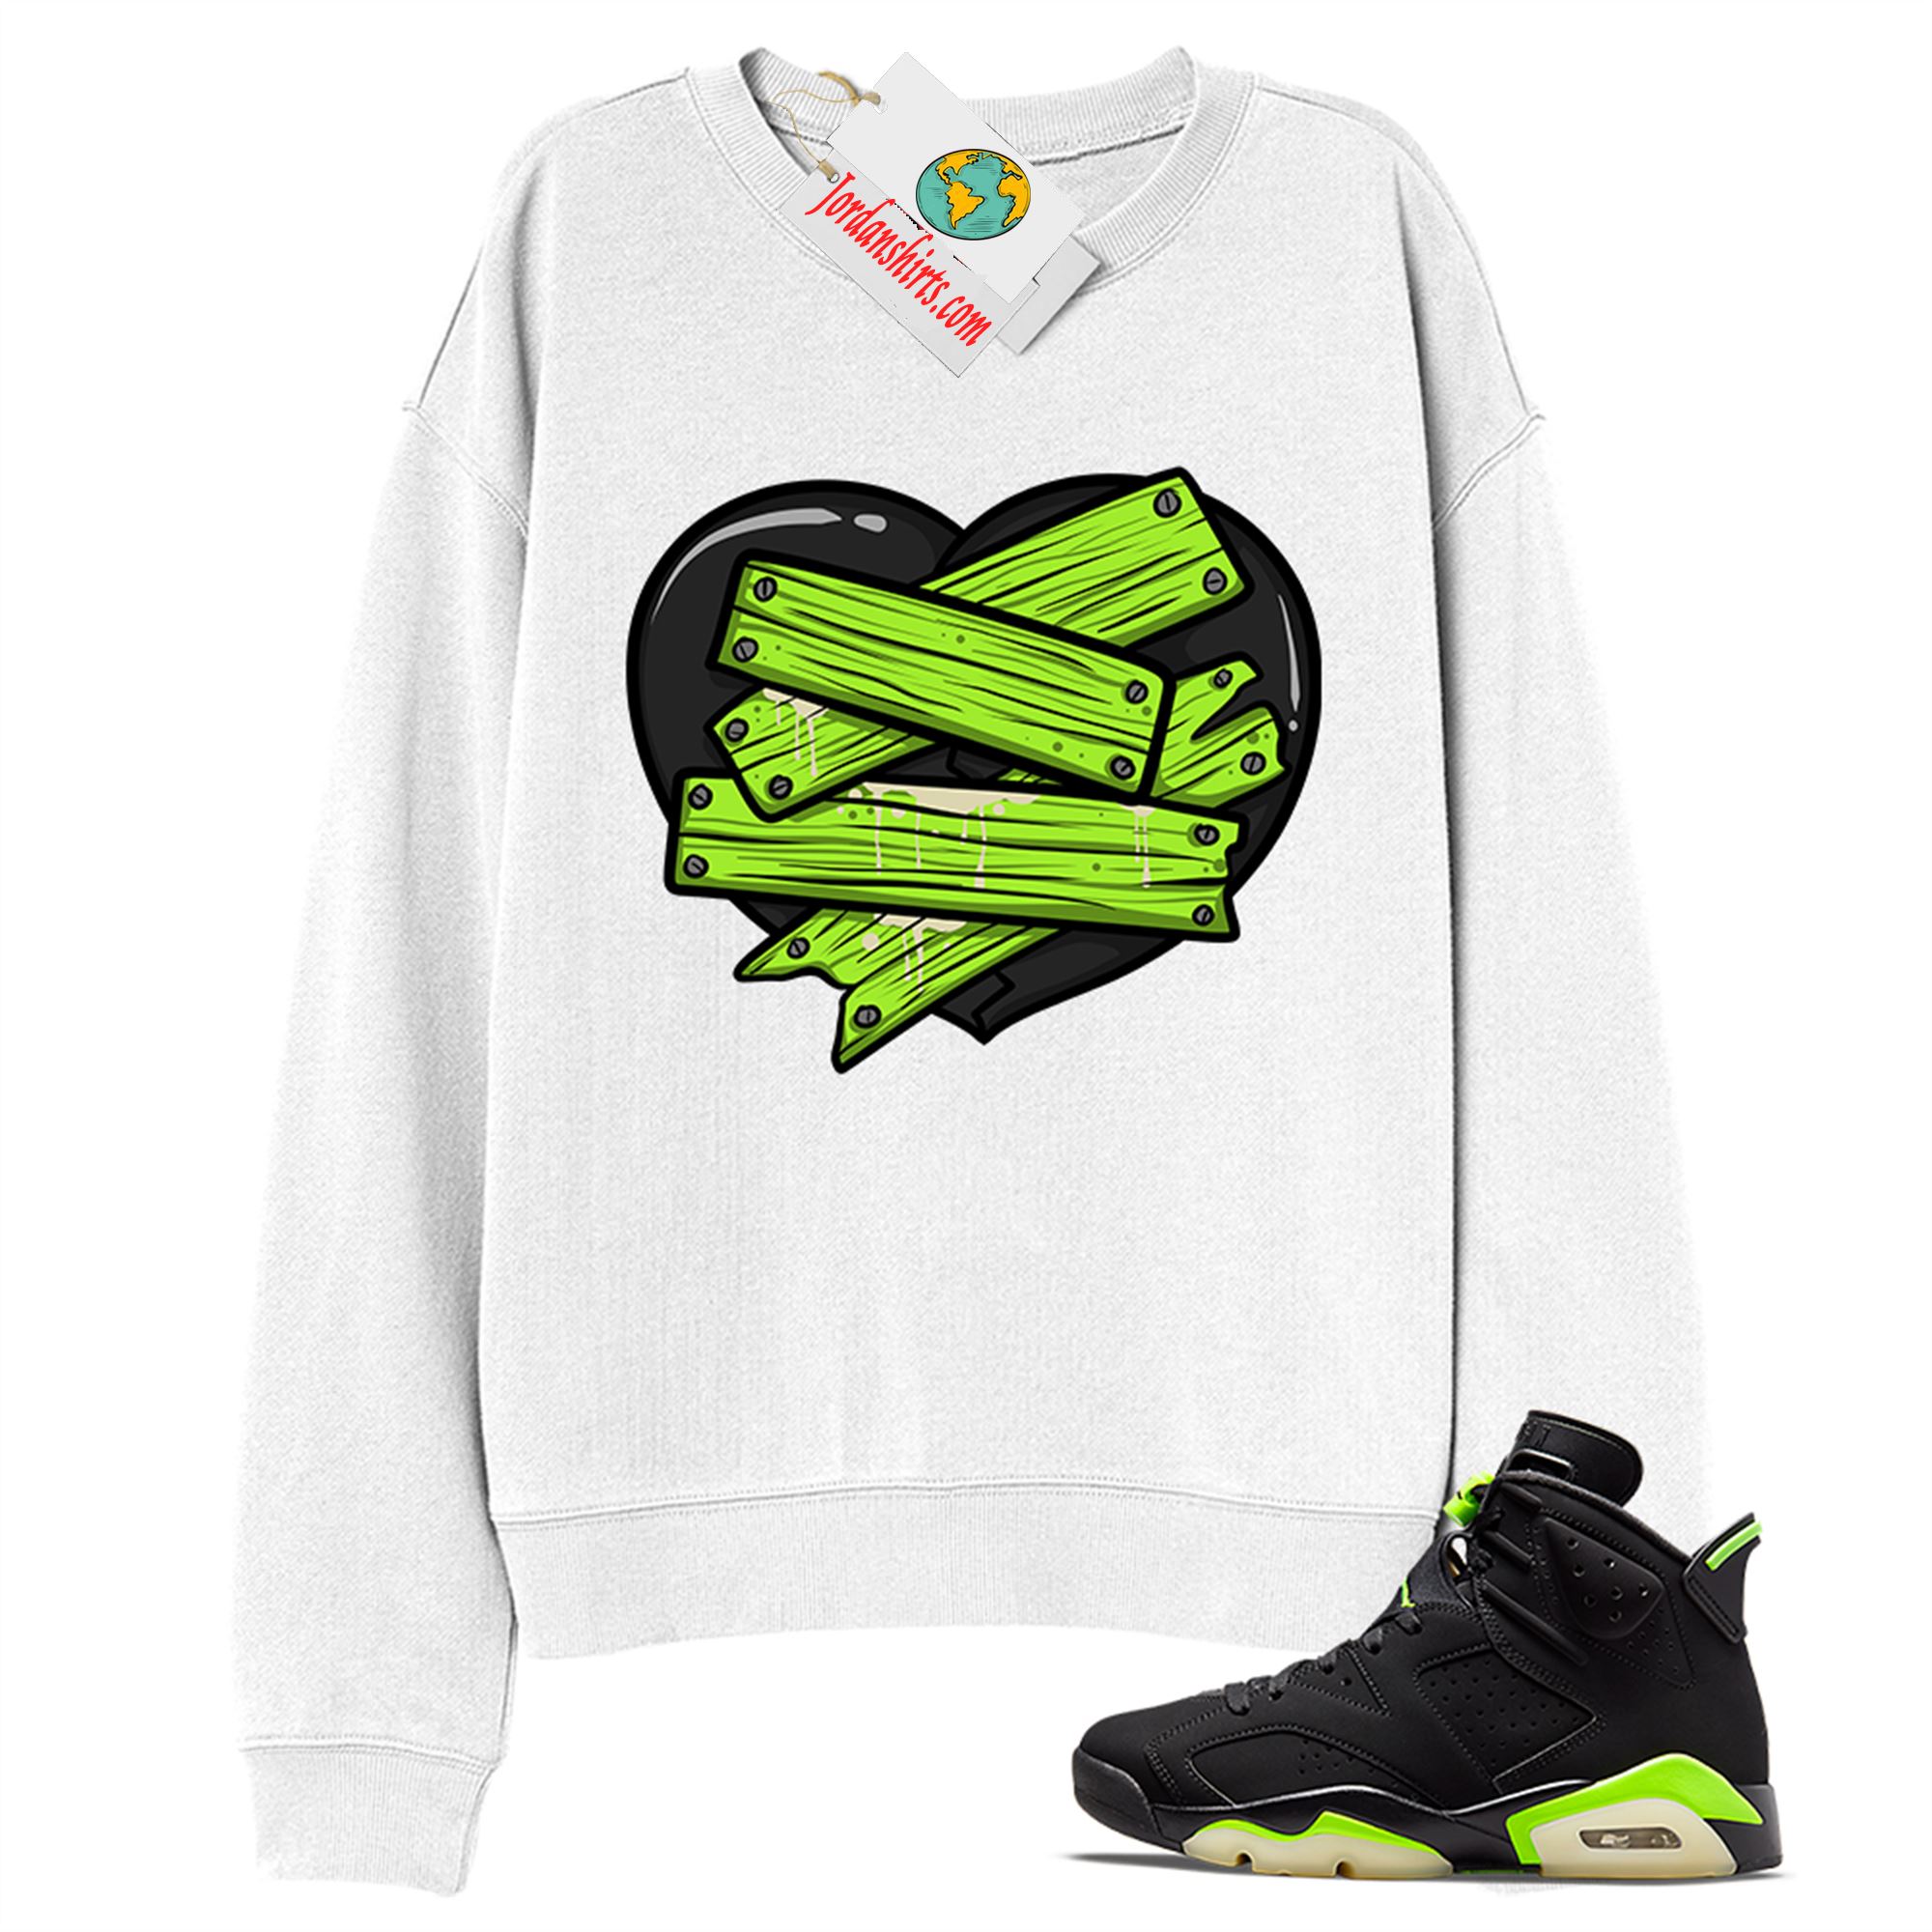 Jordan 6 Sweatshirt, Patch Love Broken Heart White Sweatshirt Air Jordan 6 Electric Green 6s Plus Size Up To 5xl